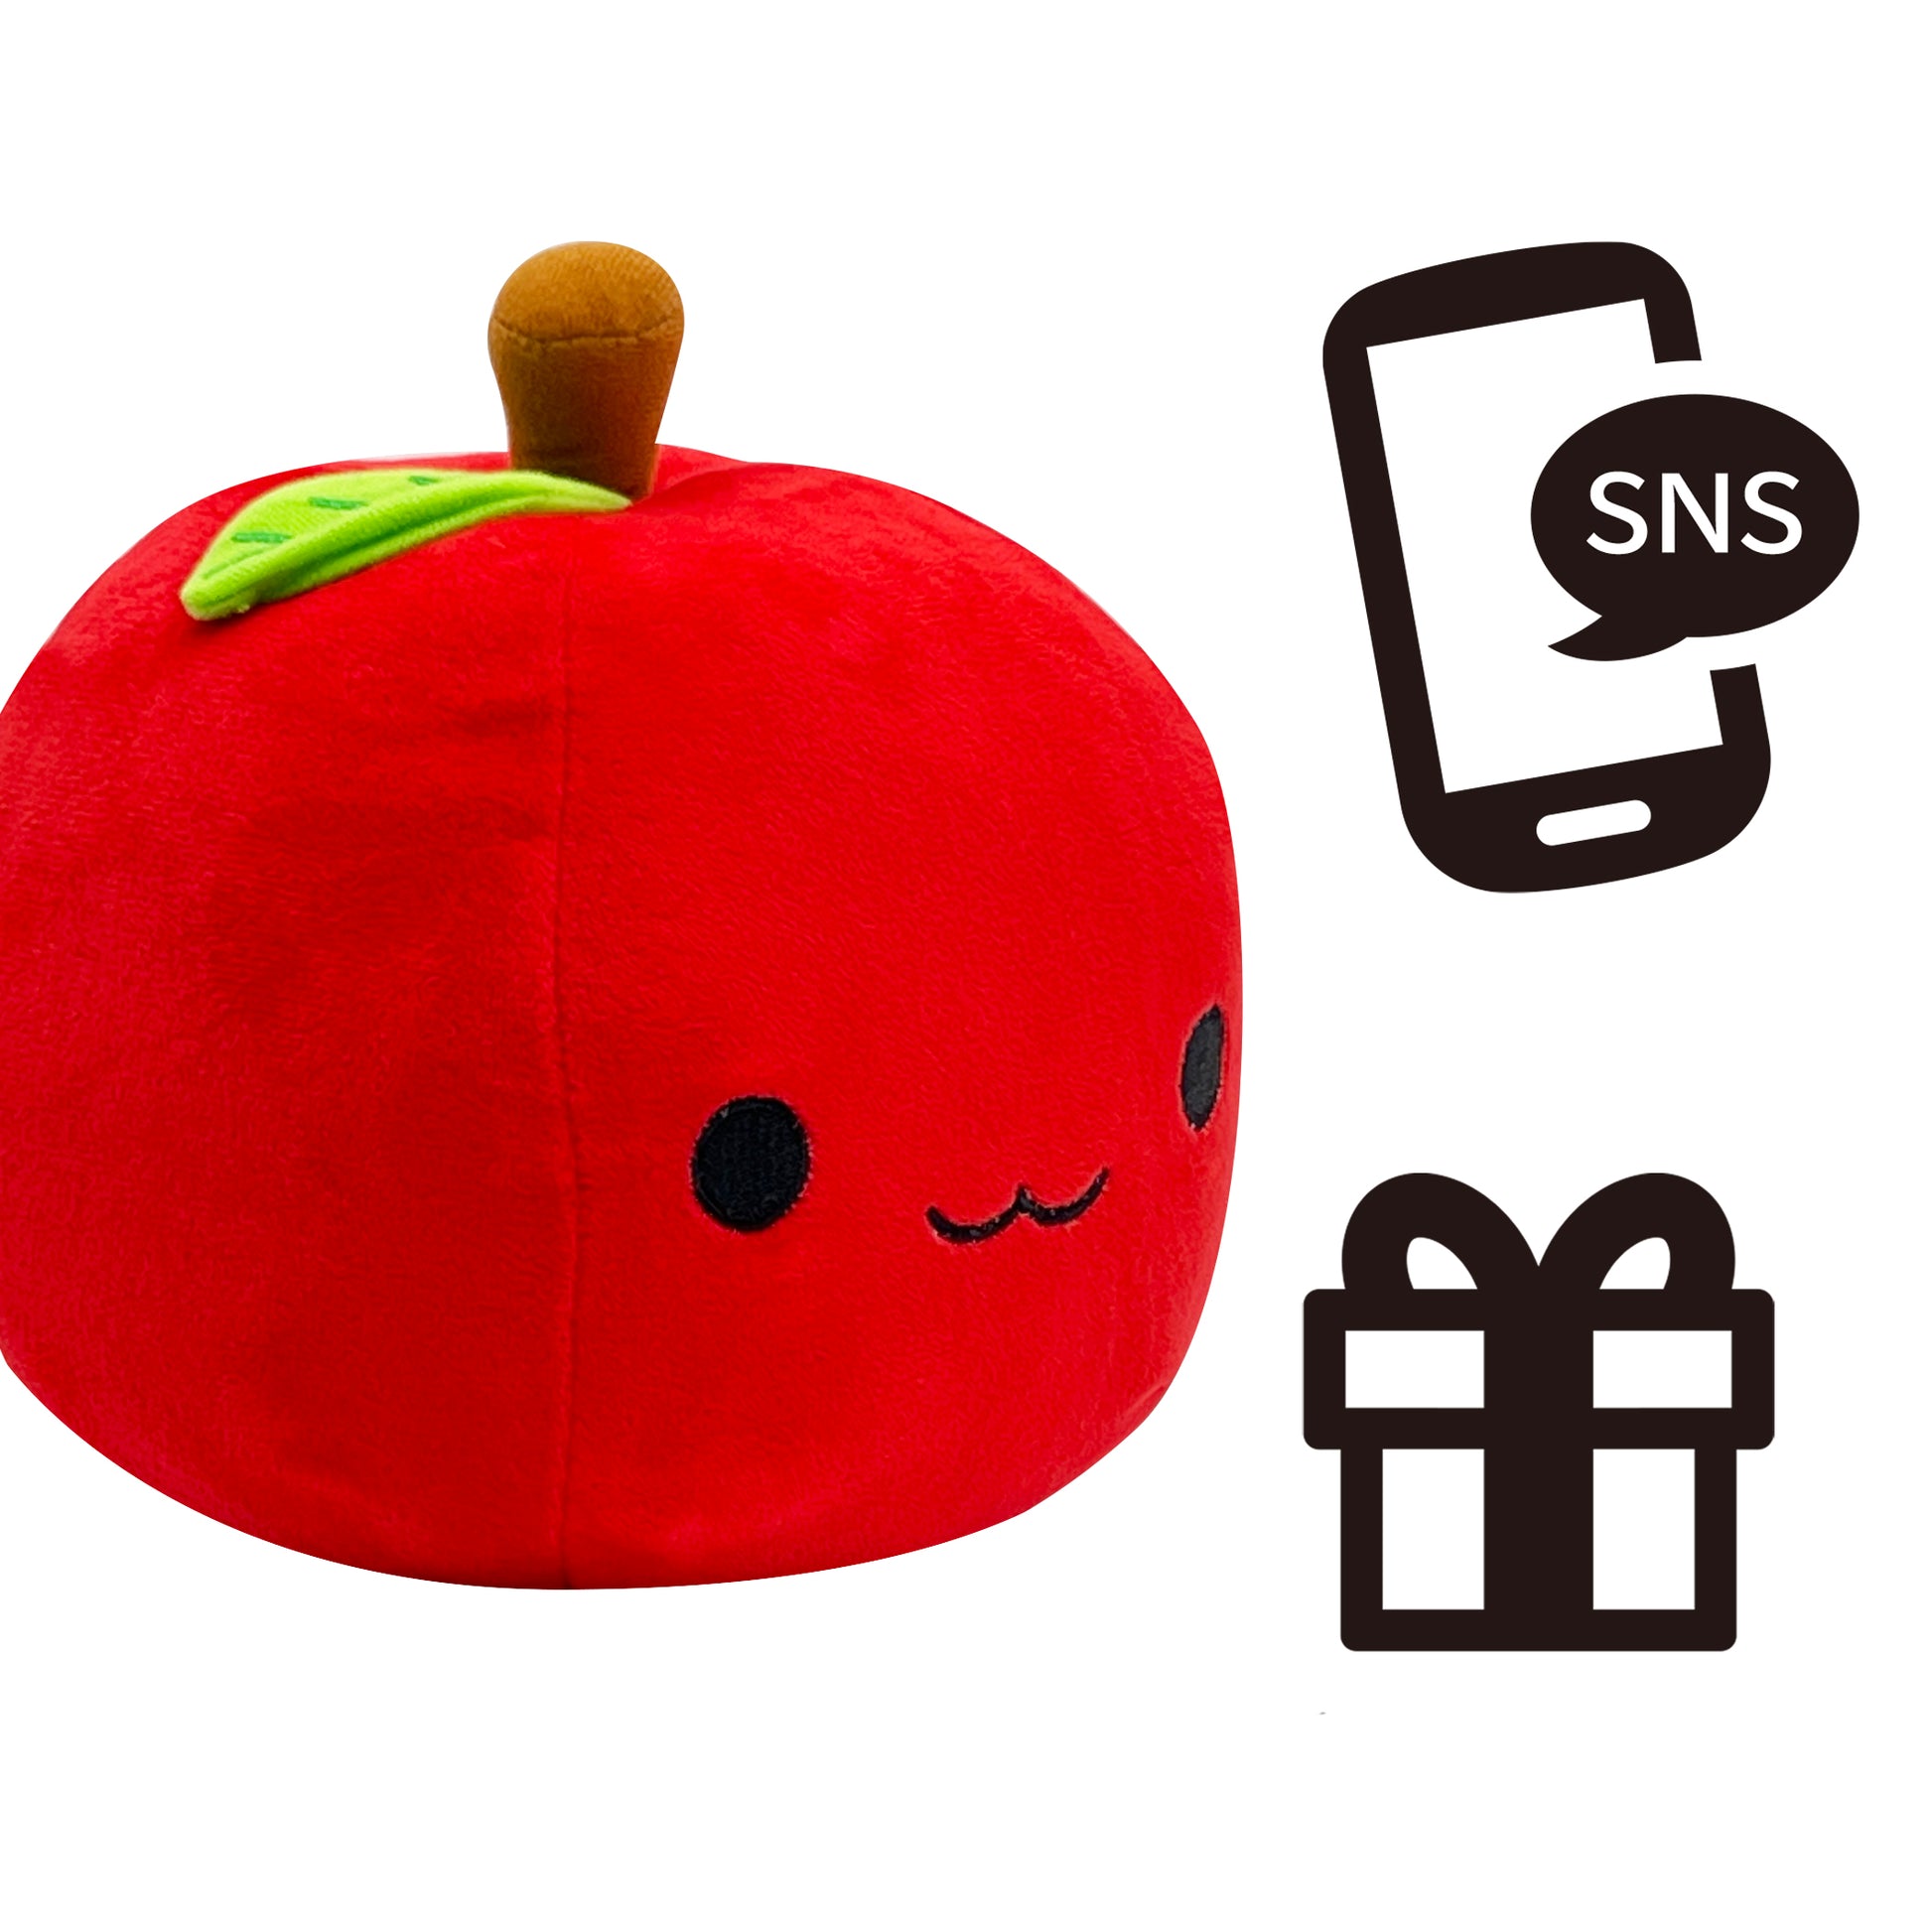 Pictogram of Apple Fruit Stuffed Toy Ringochan Red